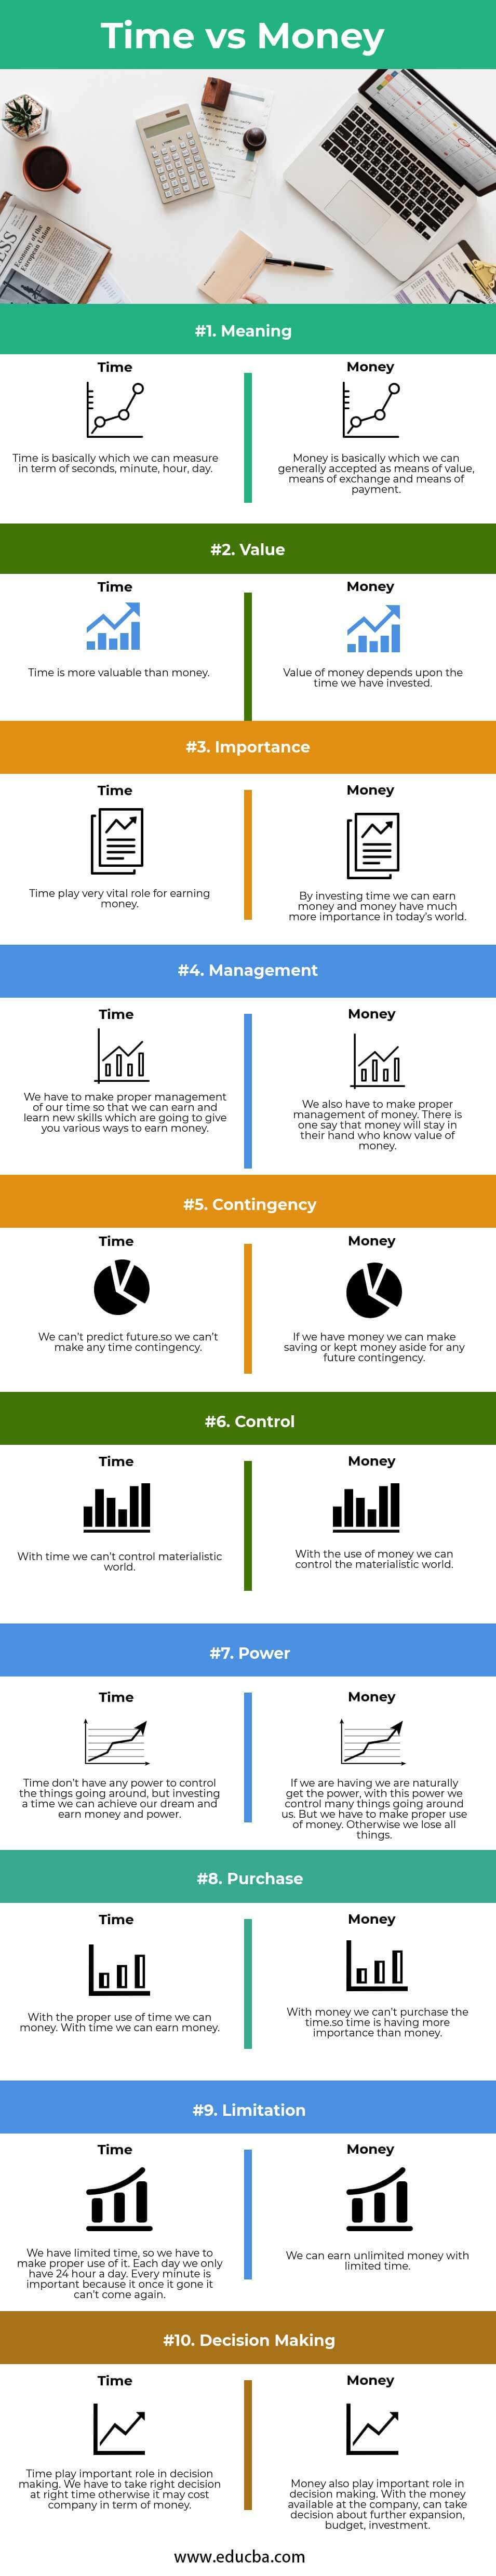 Time vs Money info